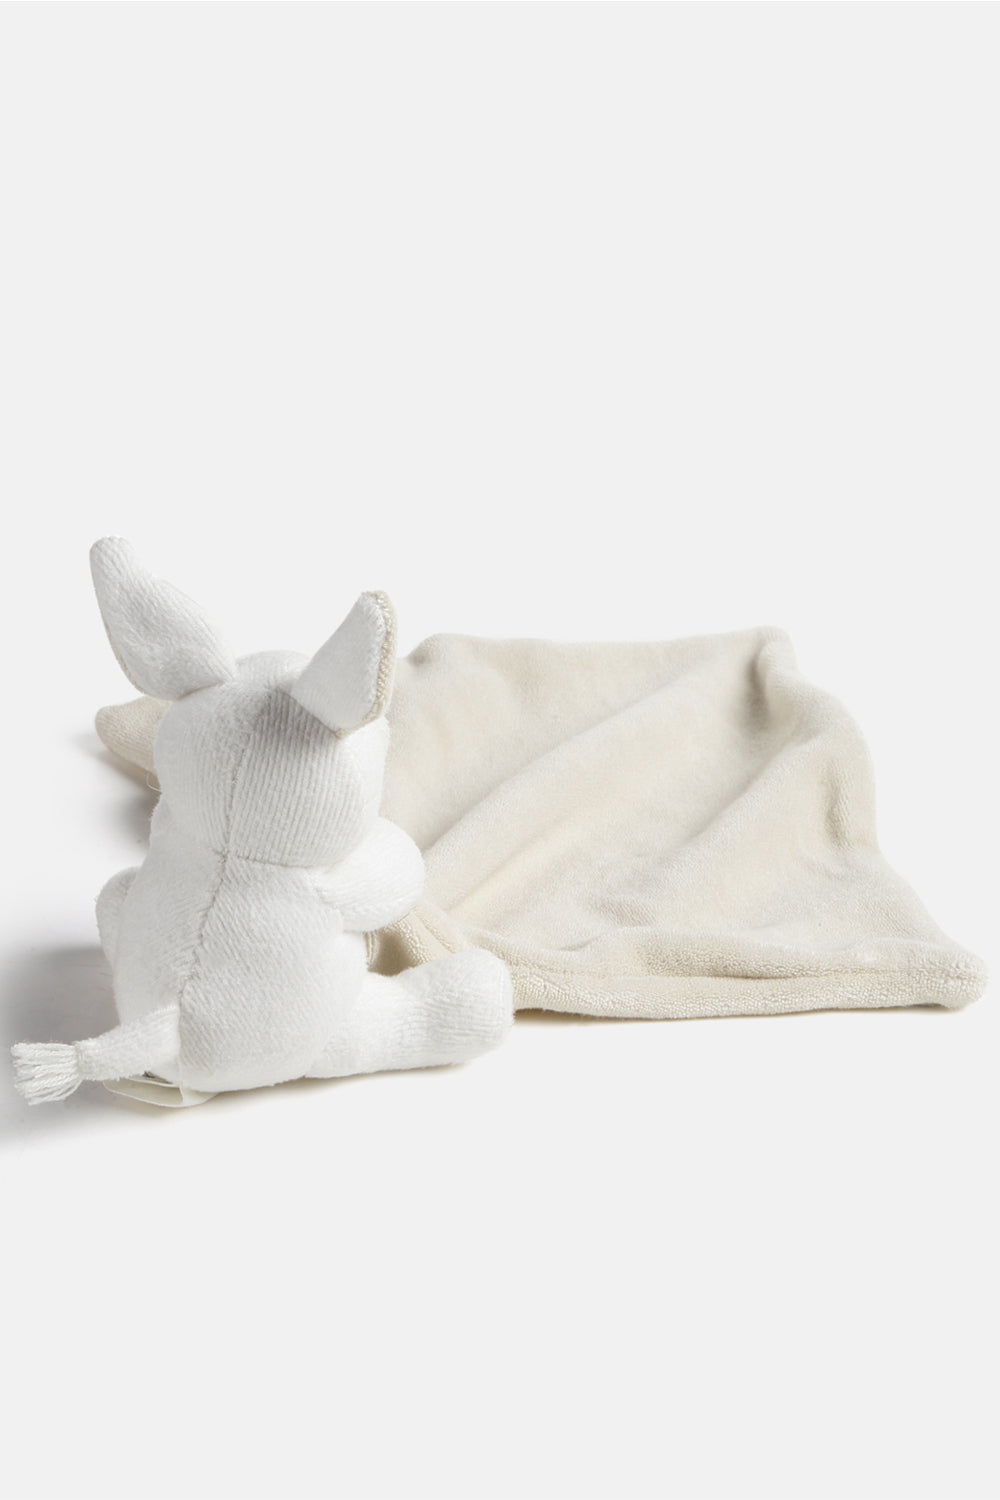 Donkey Baby Comforter, Soft Toy for Newborn baby